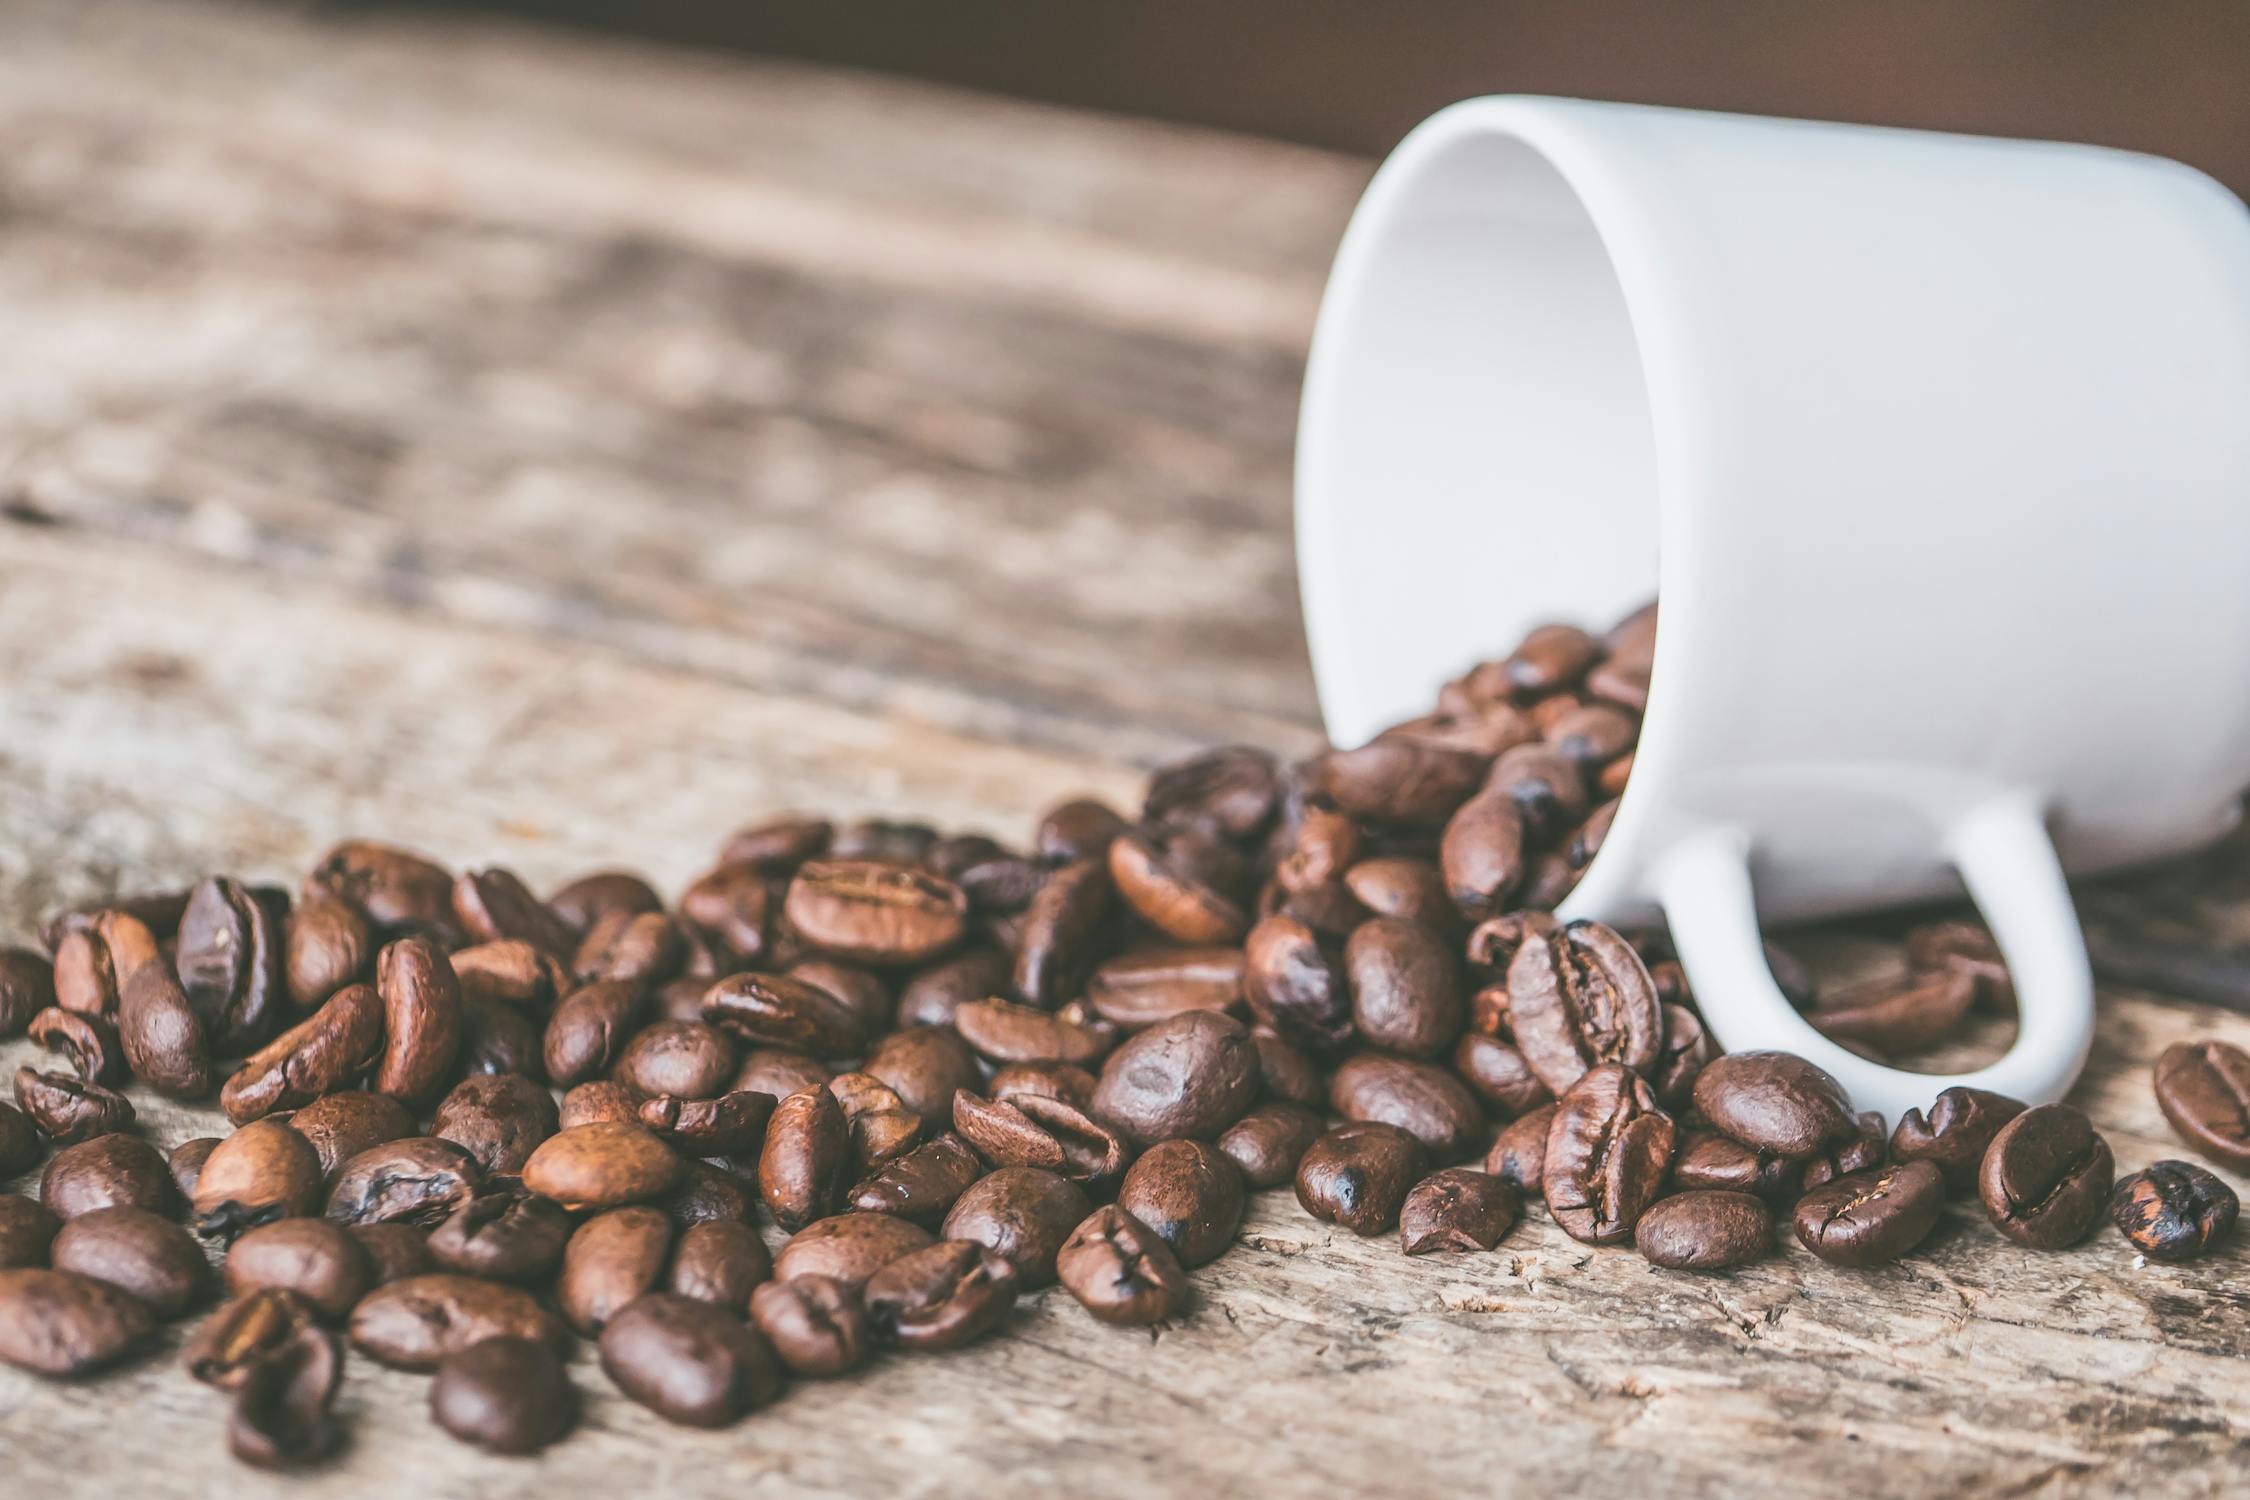 Image of coffee beans and white mug